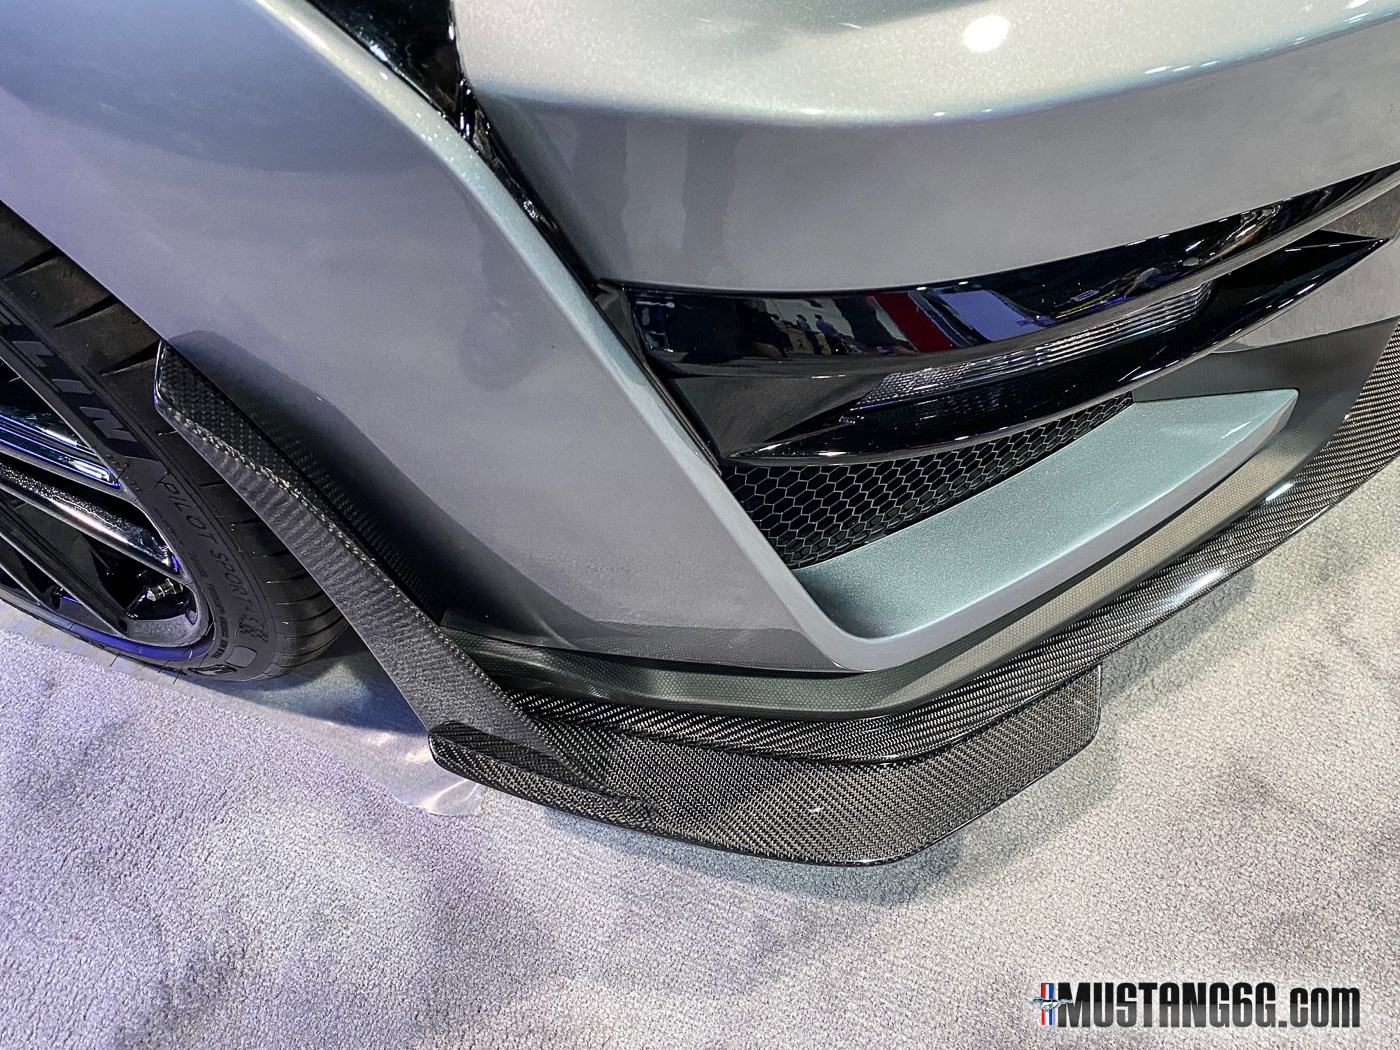 Anderson-Composites-2020-Shelby-GT500-Build-SEMA-2019-8.jpg